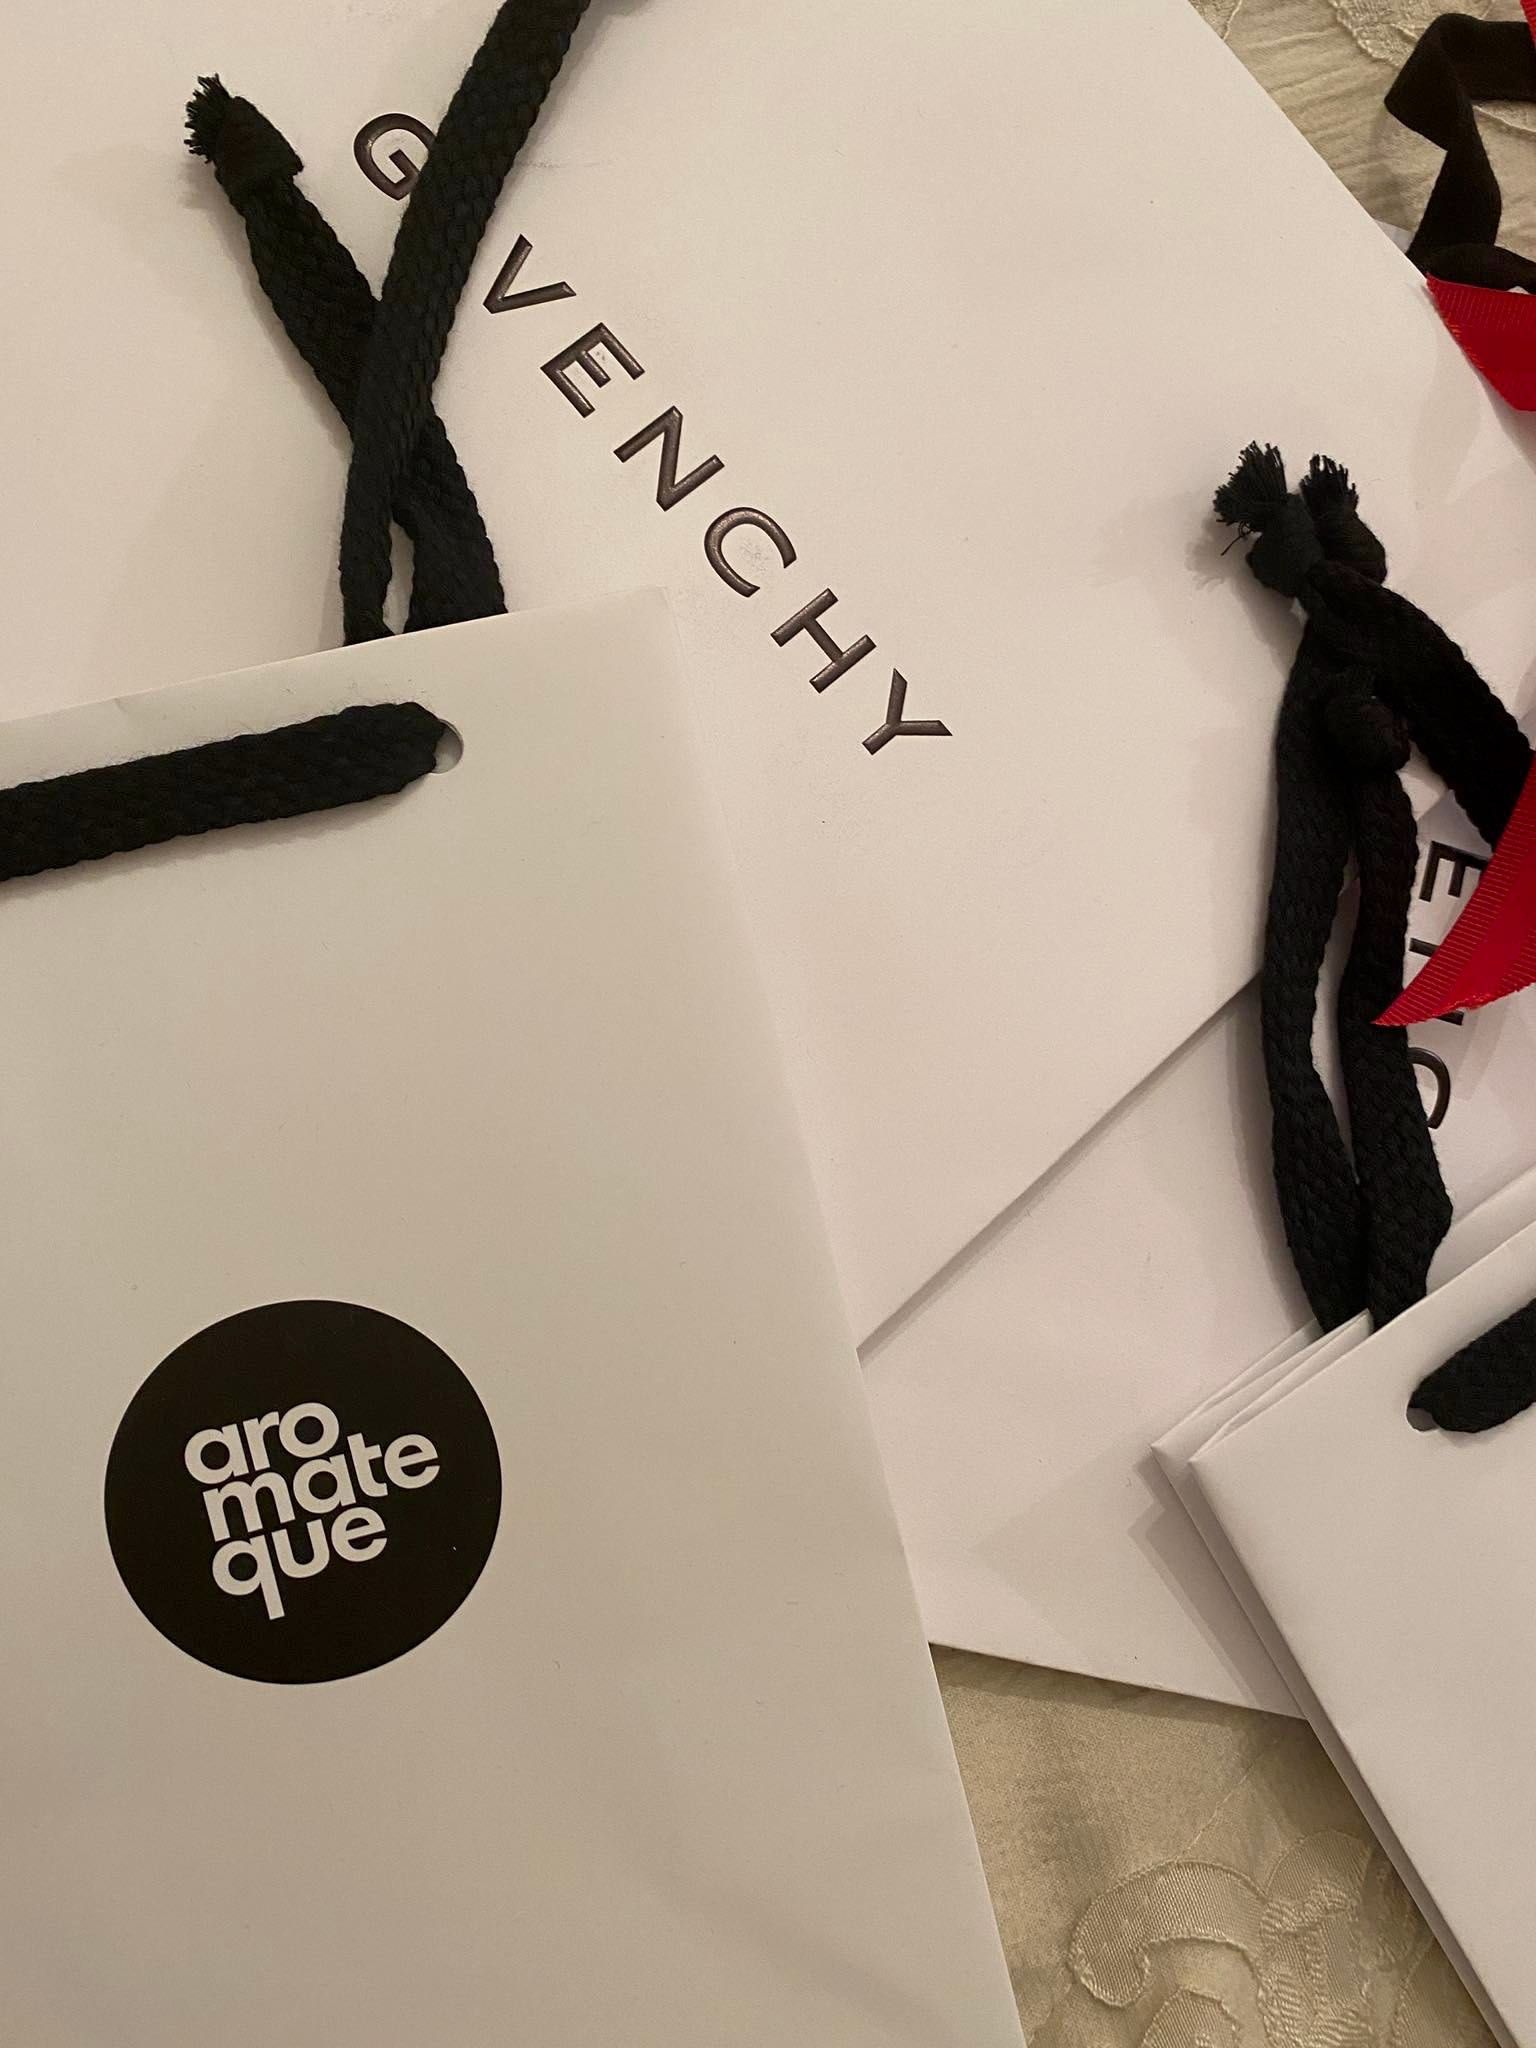 Подарочные пакеты Givenchy Chanel Aromateque Prada ЦУМ Диор